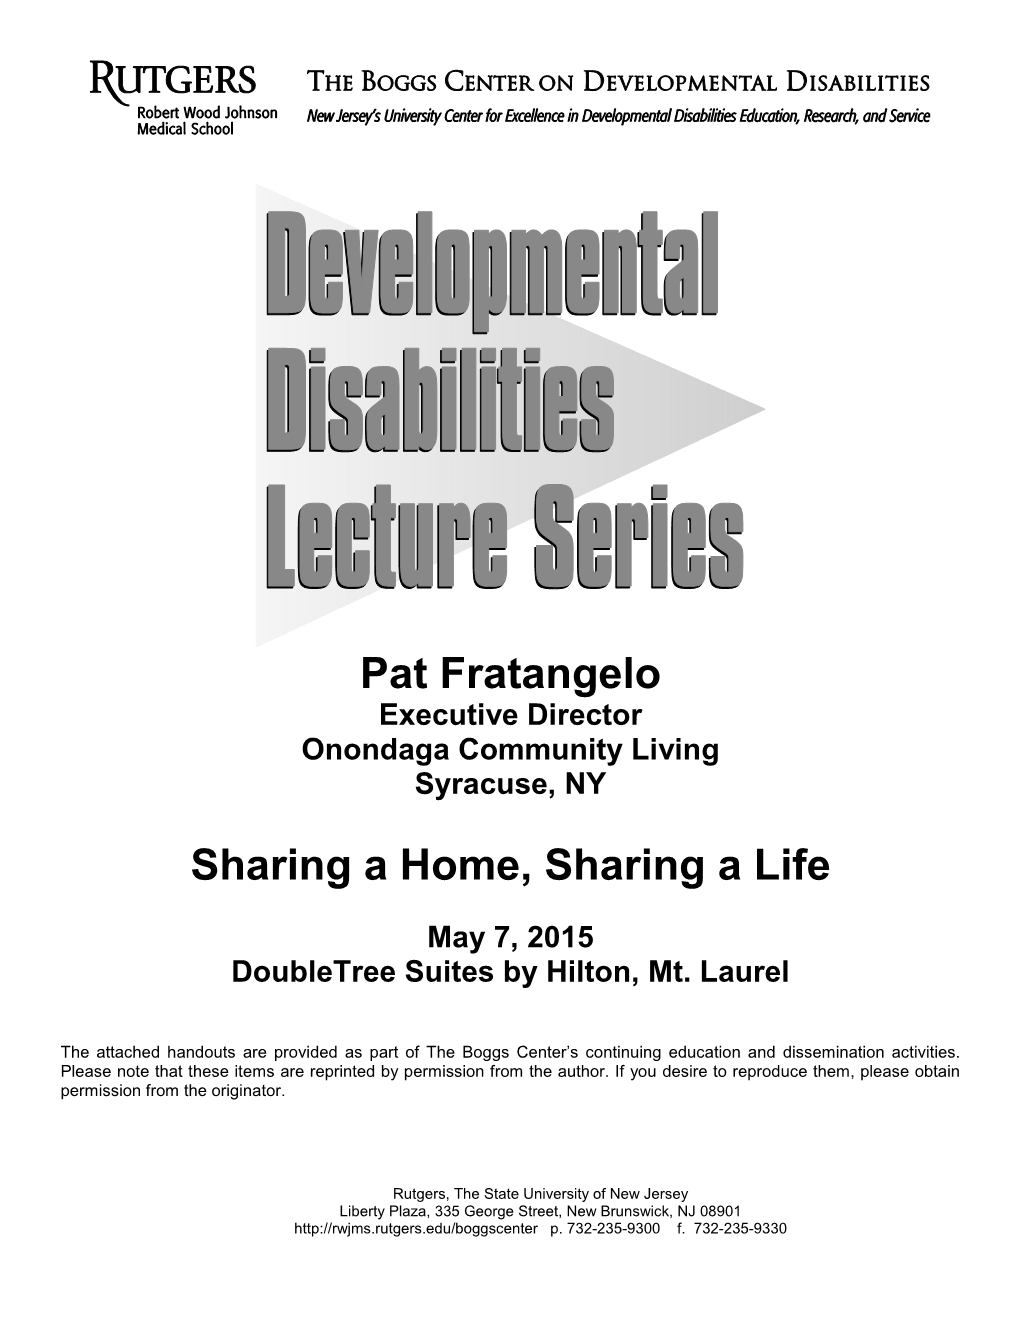 Pat Fratangelo Sharing a Home, Sharing a Life